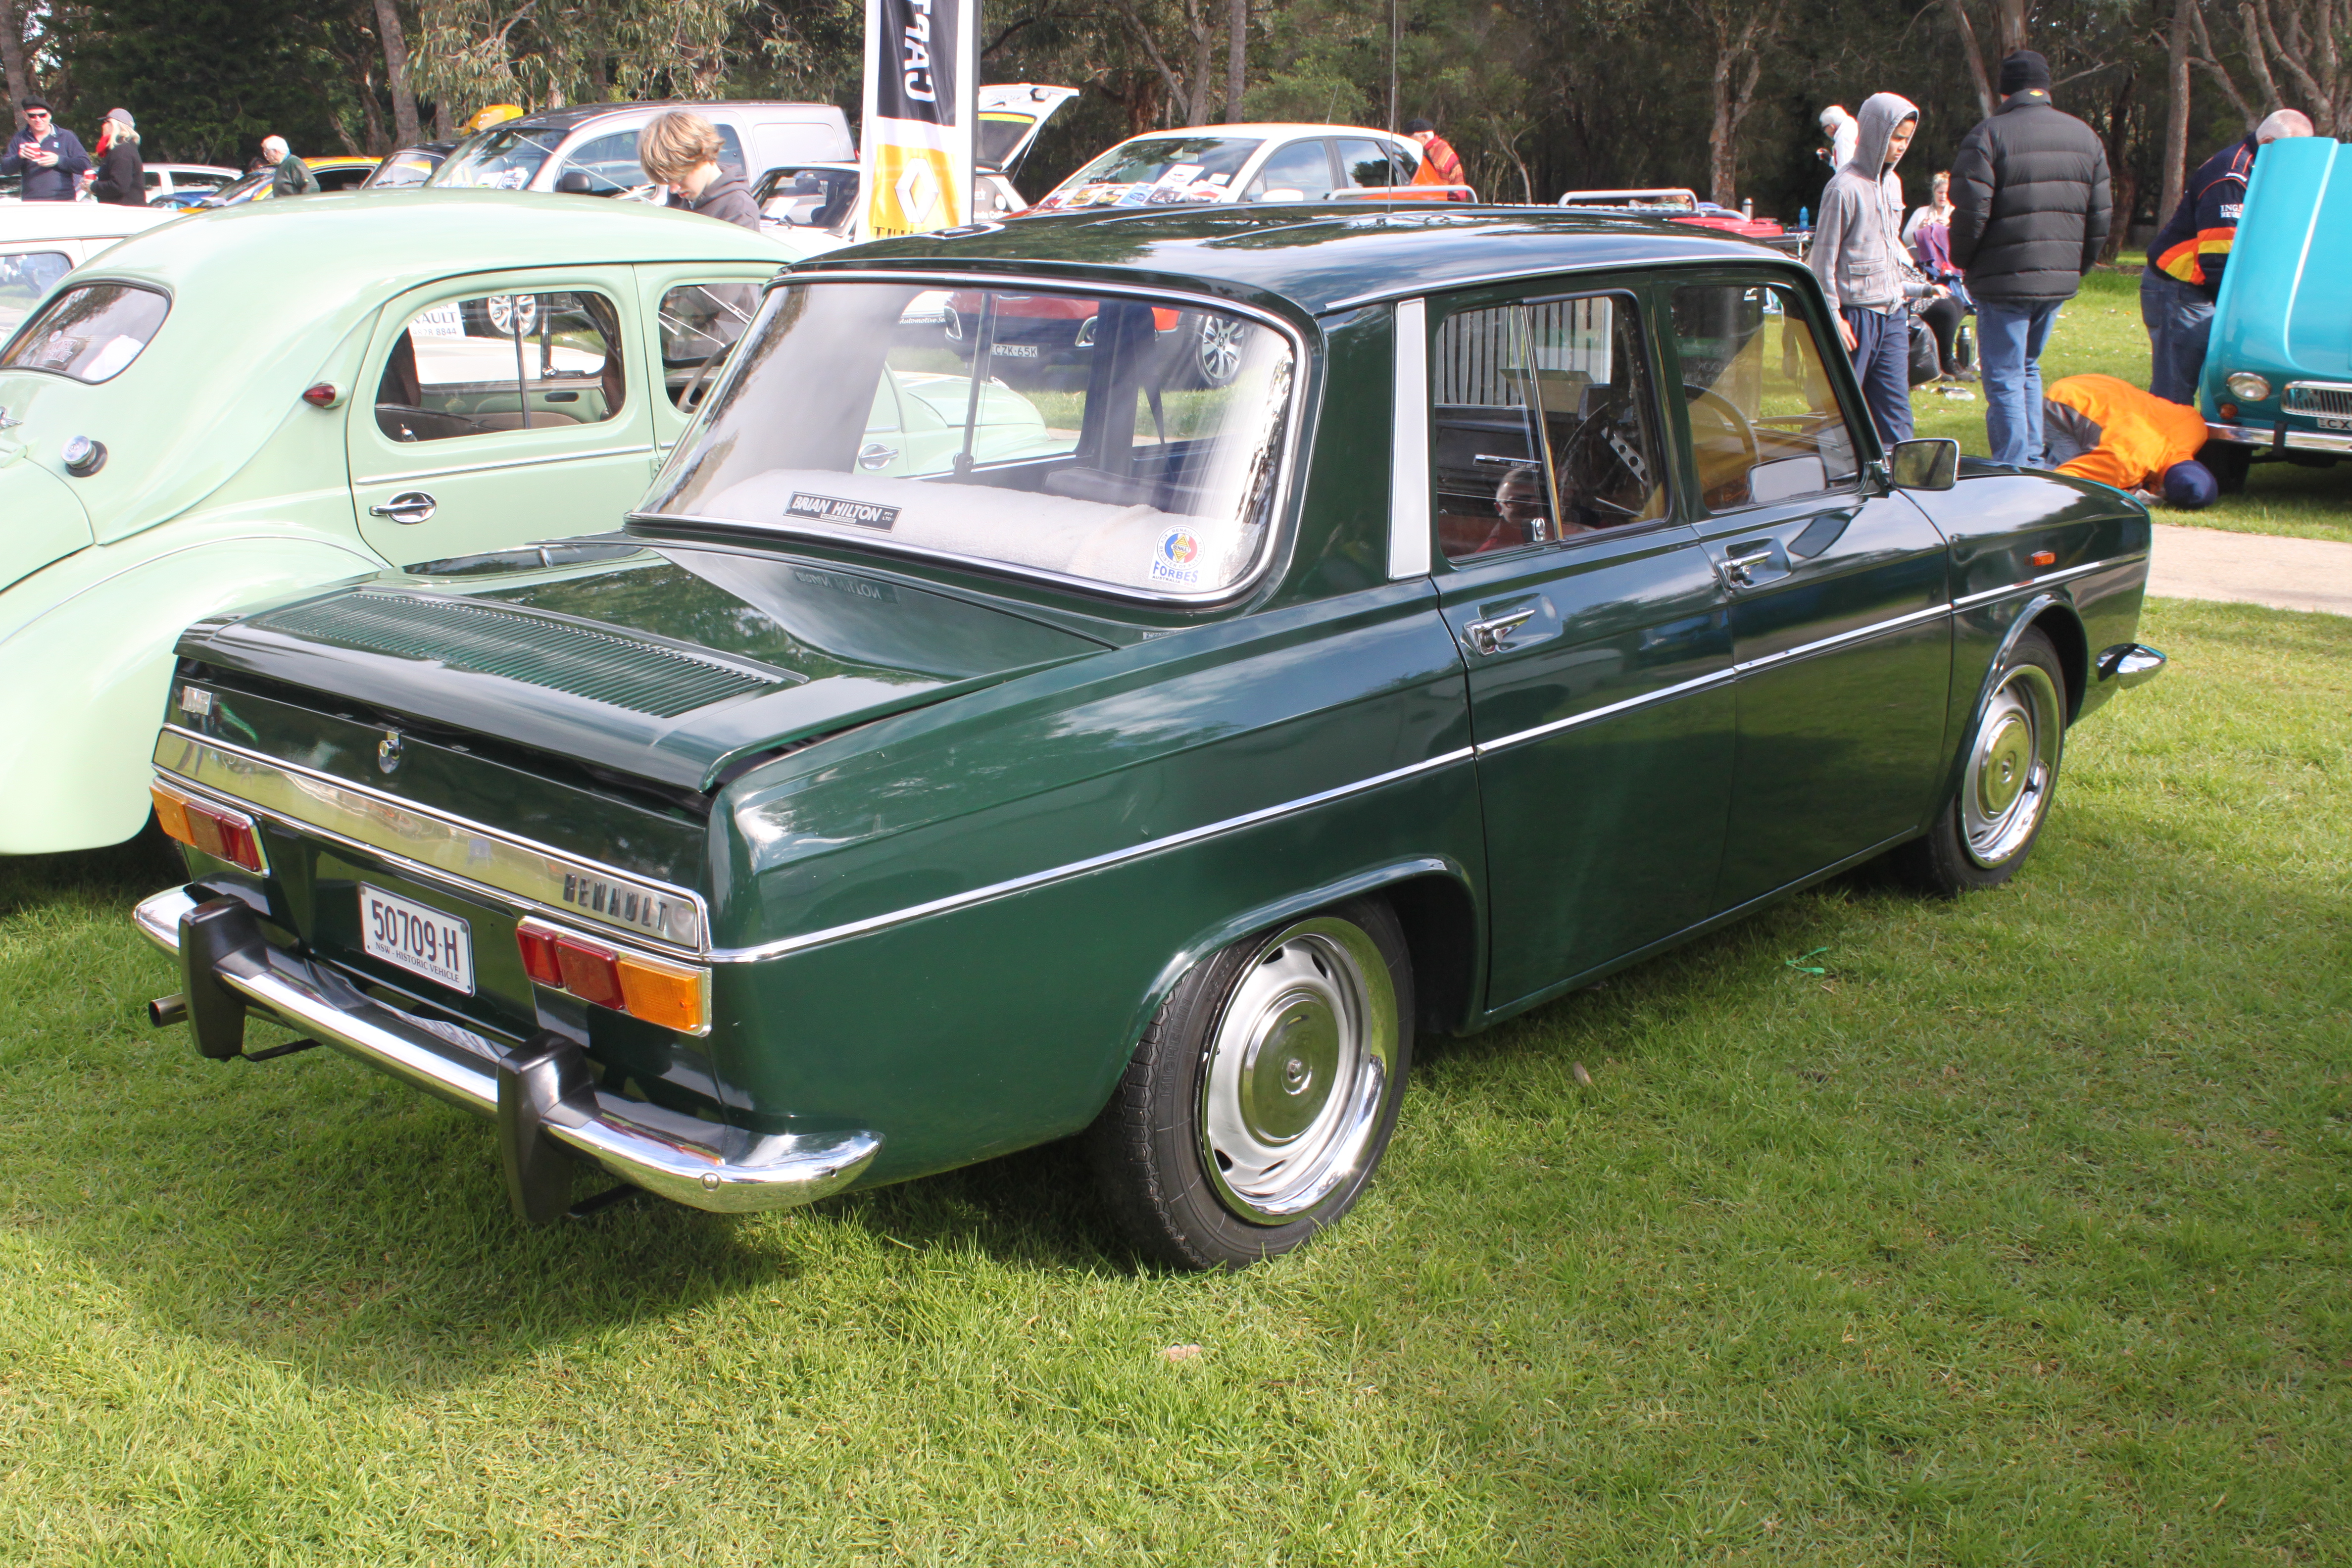 File:1969 Renault 10 S sedan (19903786272).jpg - Wikimedia Commons